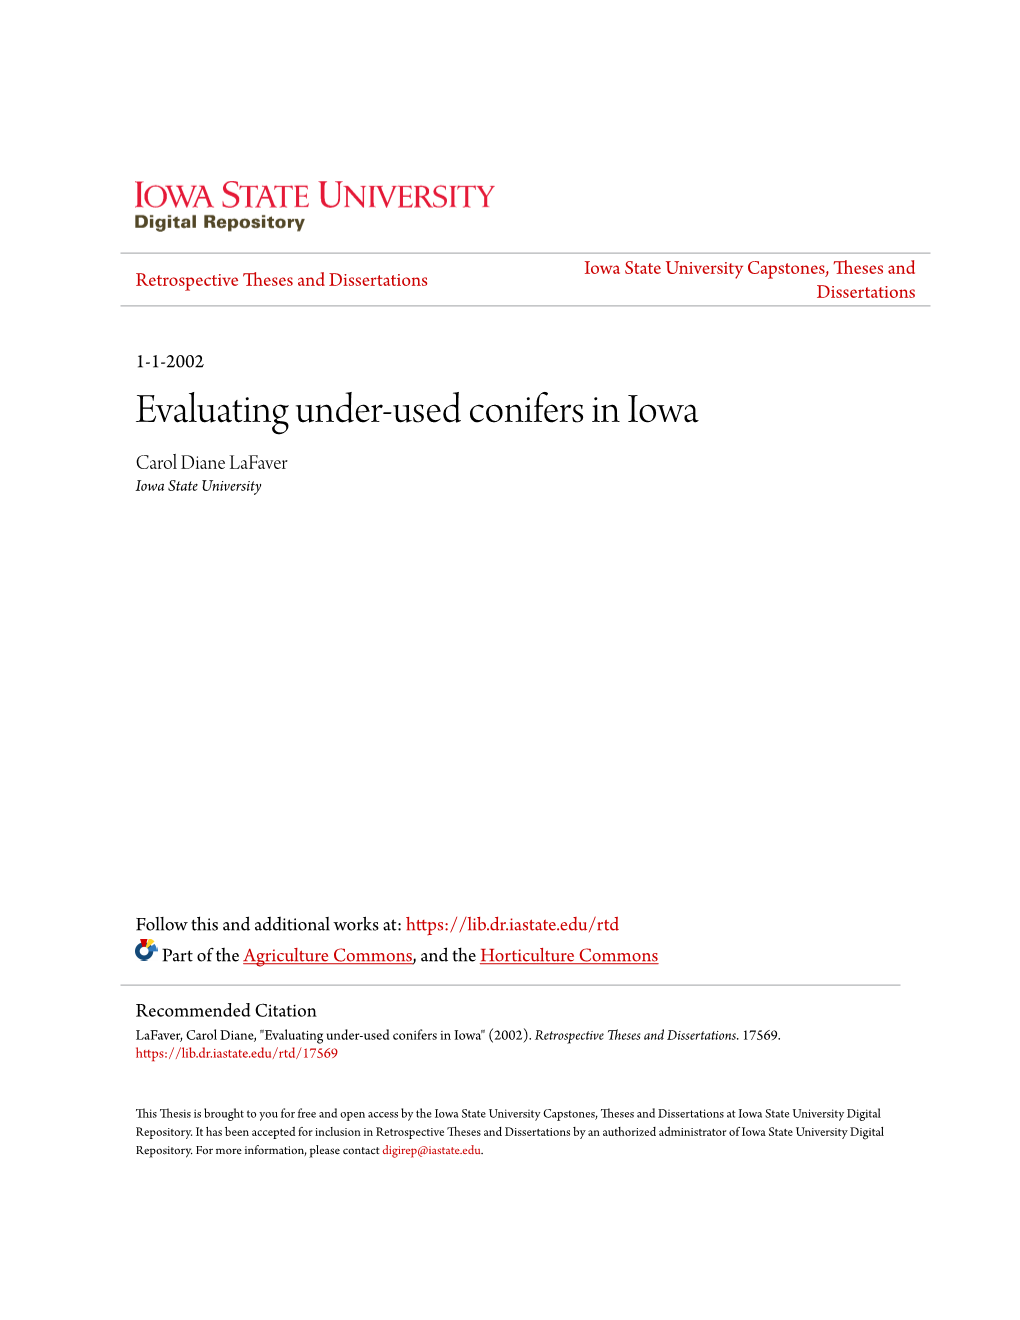 Evaluating Under-Used Conifers in Iowa Carol Diane Lafaver Iowa State University